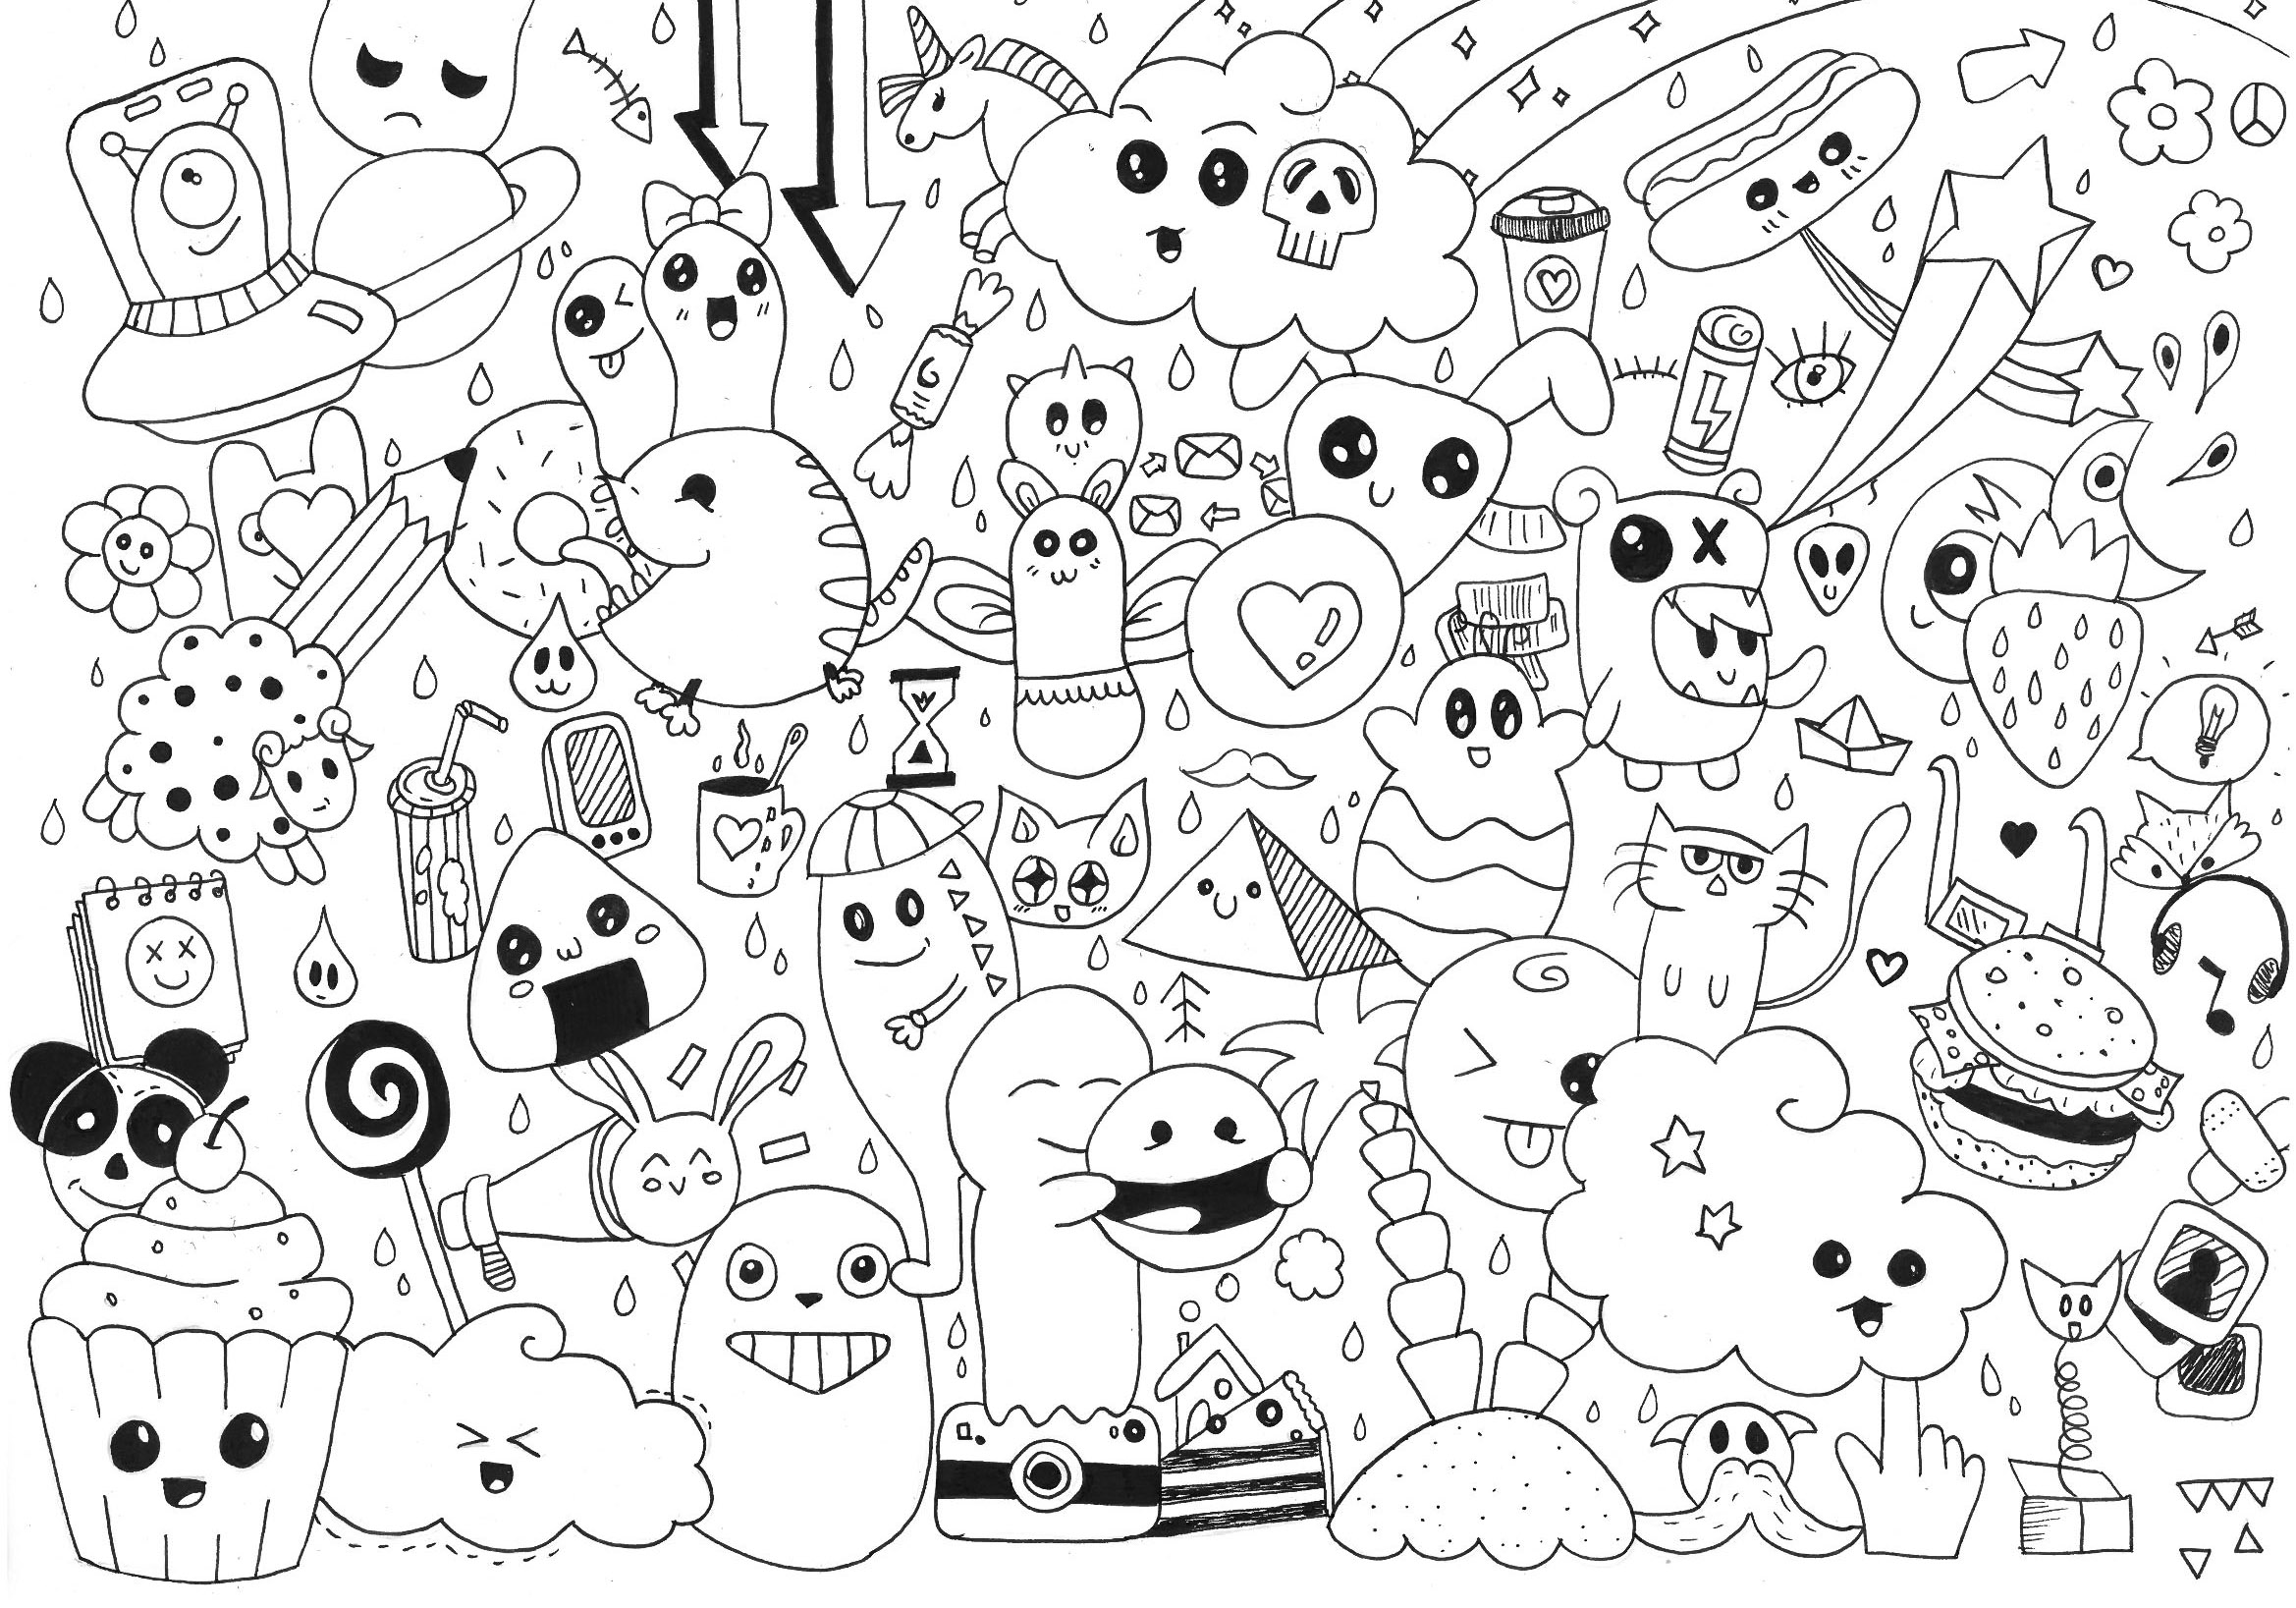 Download Doodle rachel - Doodle Art / Doodling Adult Coloring Pages